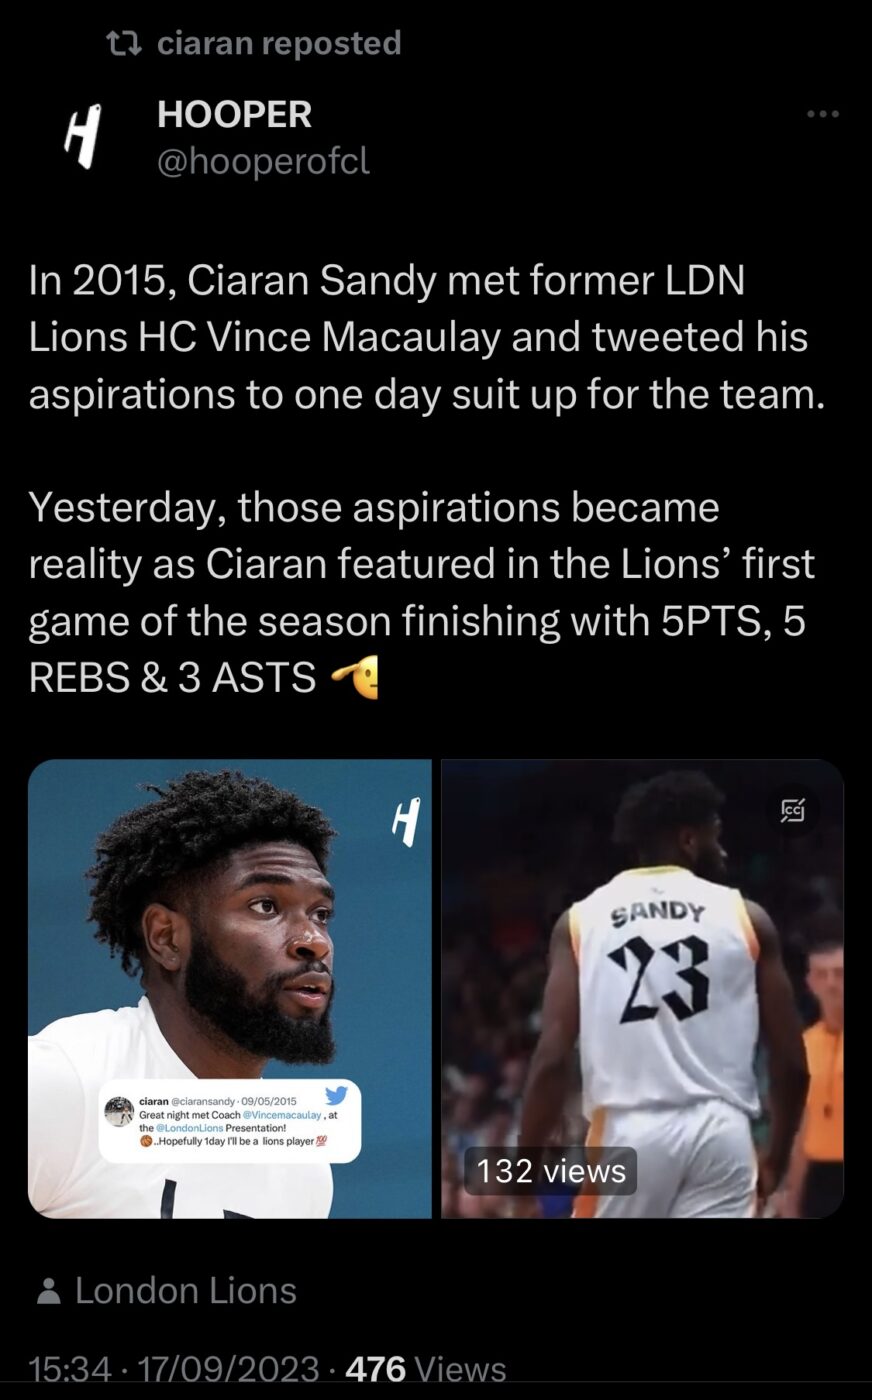 Social media post regarding ex-pupil Ciaran Sandy going pro with the London Lions Basketball team.